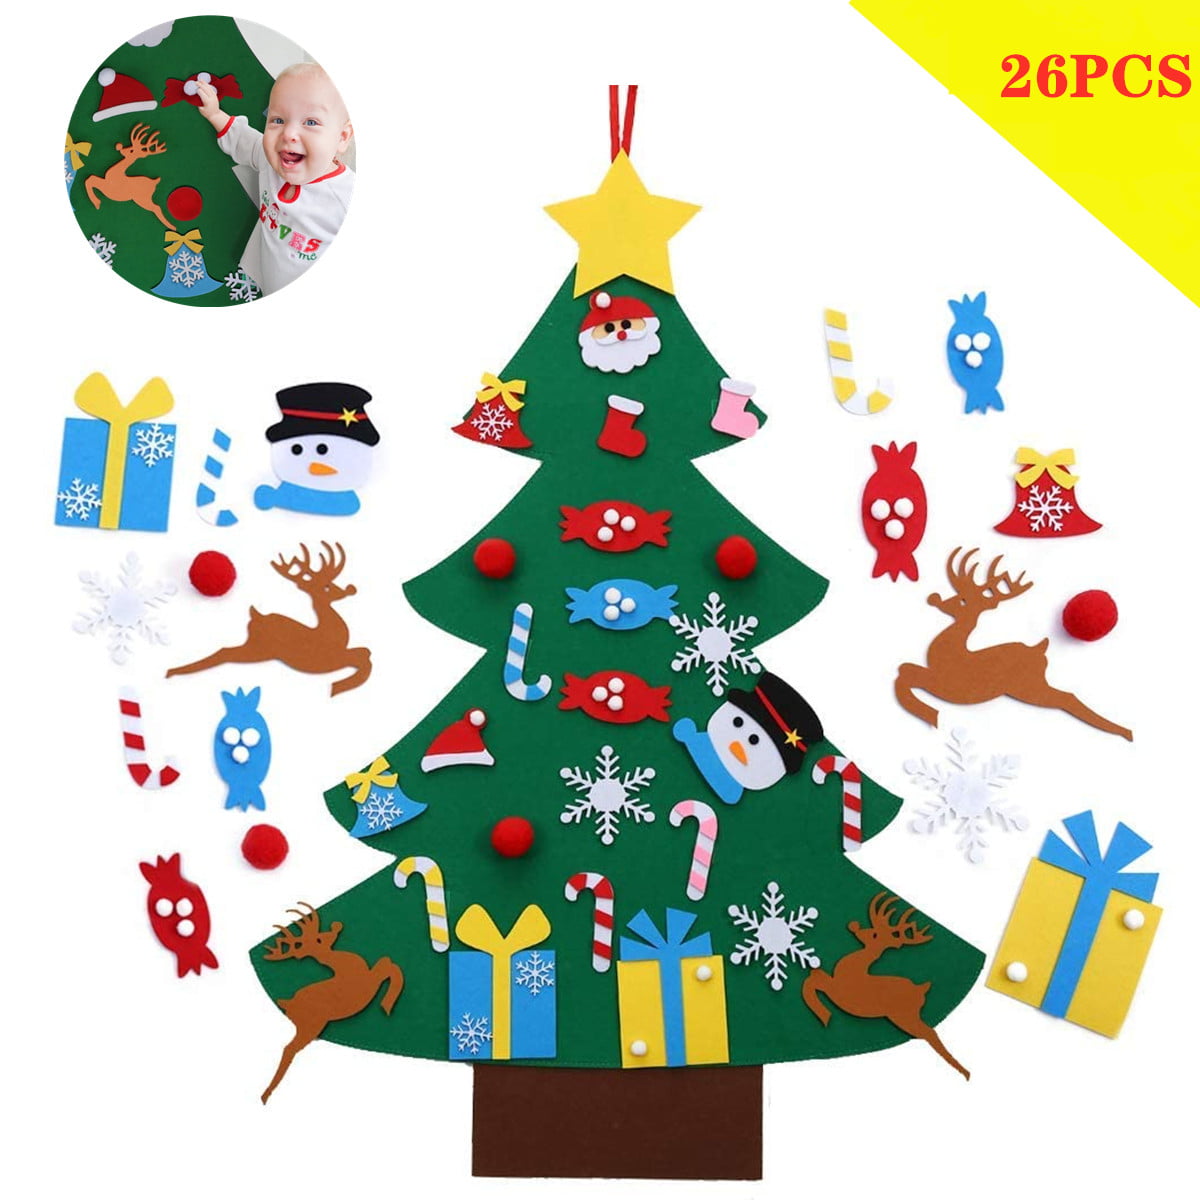 A Felt Christmas Tree 3ft DIY Christmas Tree Set with 26pcs Detachable Ornaments for Home Wall Door Hanging Decor